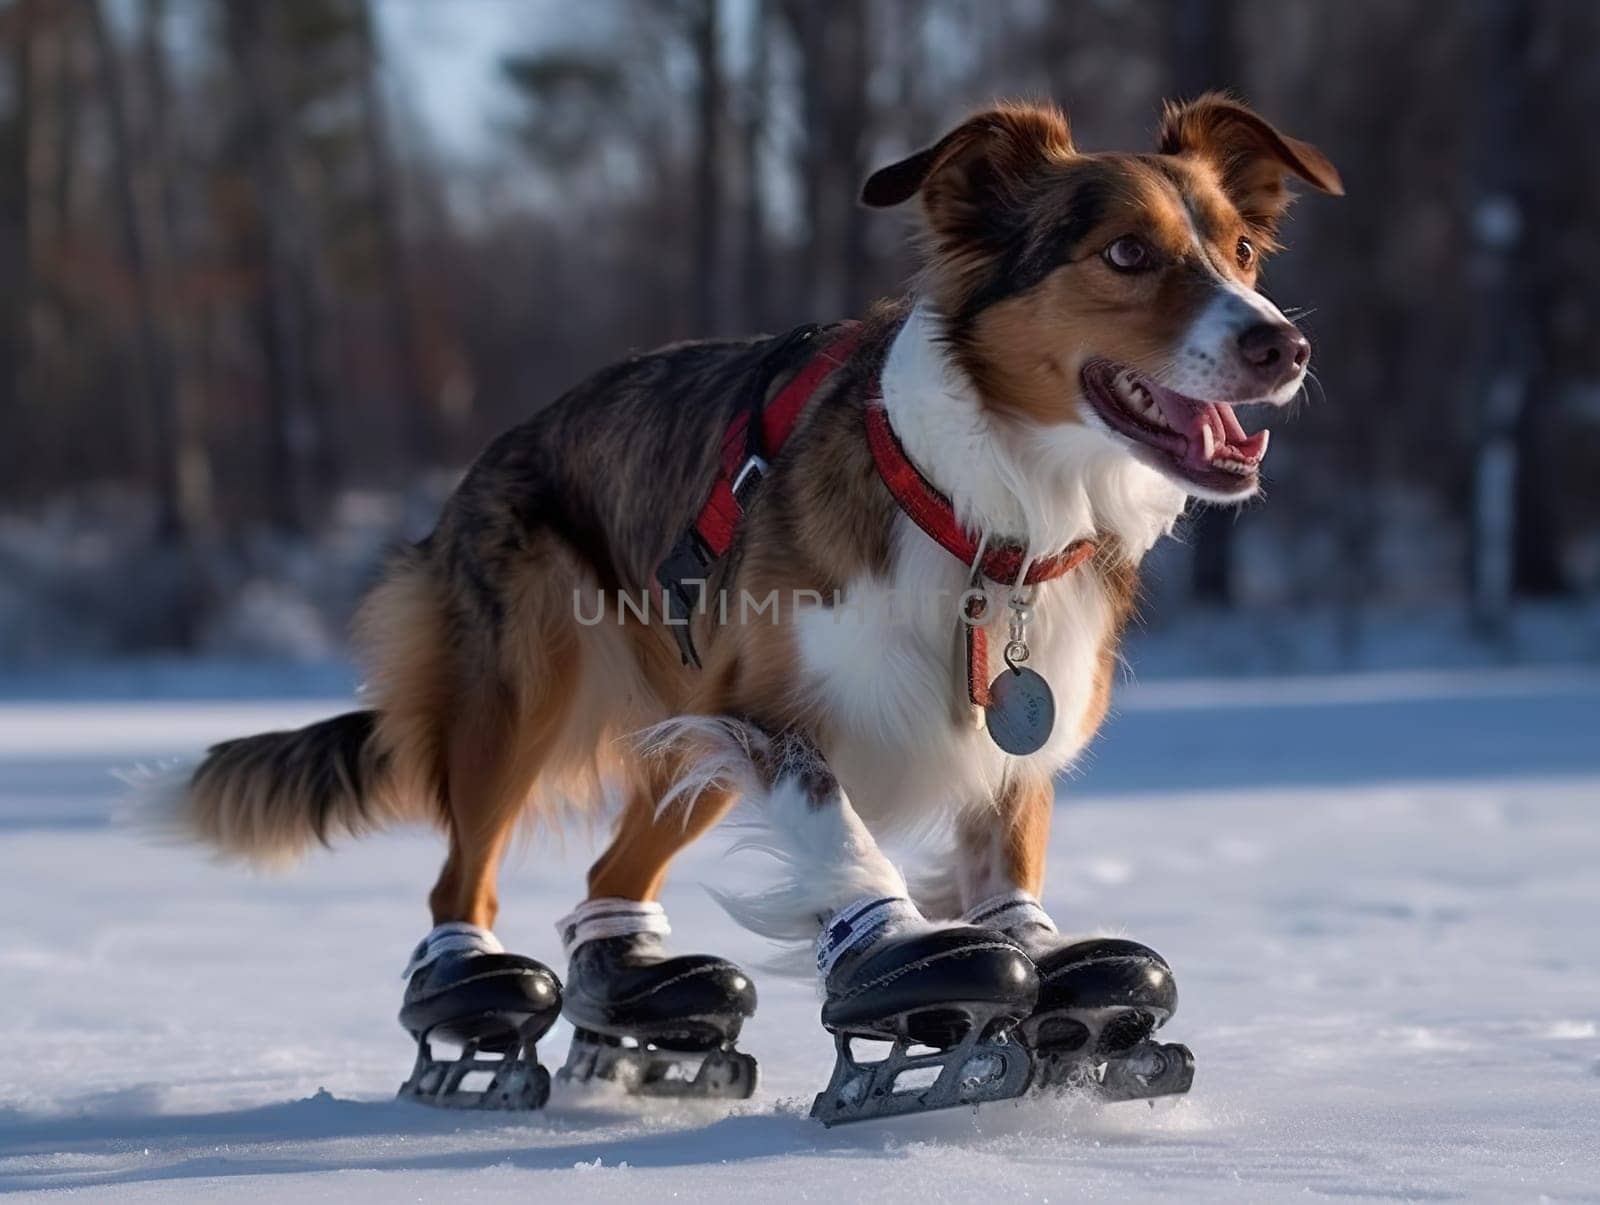 Cheerful Dog Enjoys Ice Skating